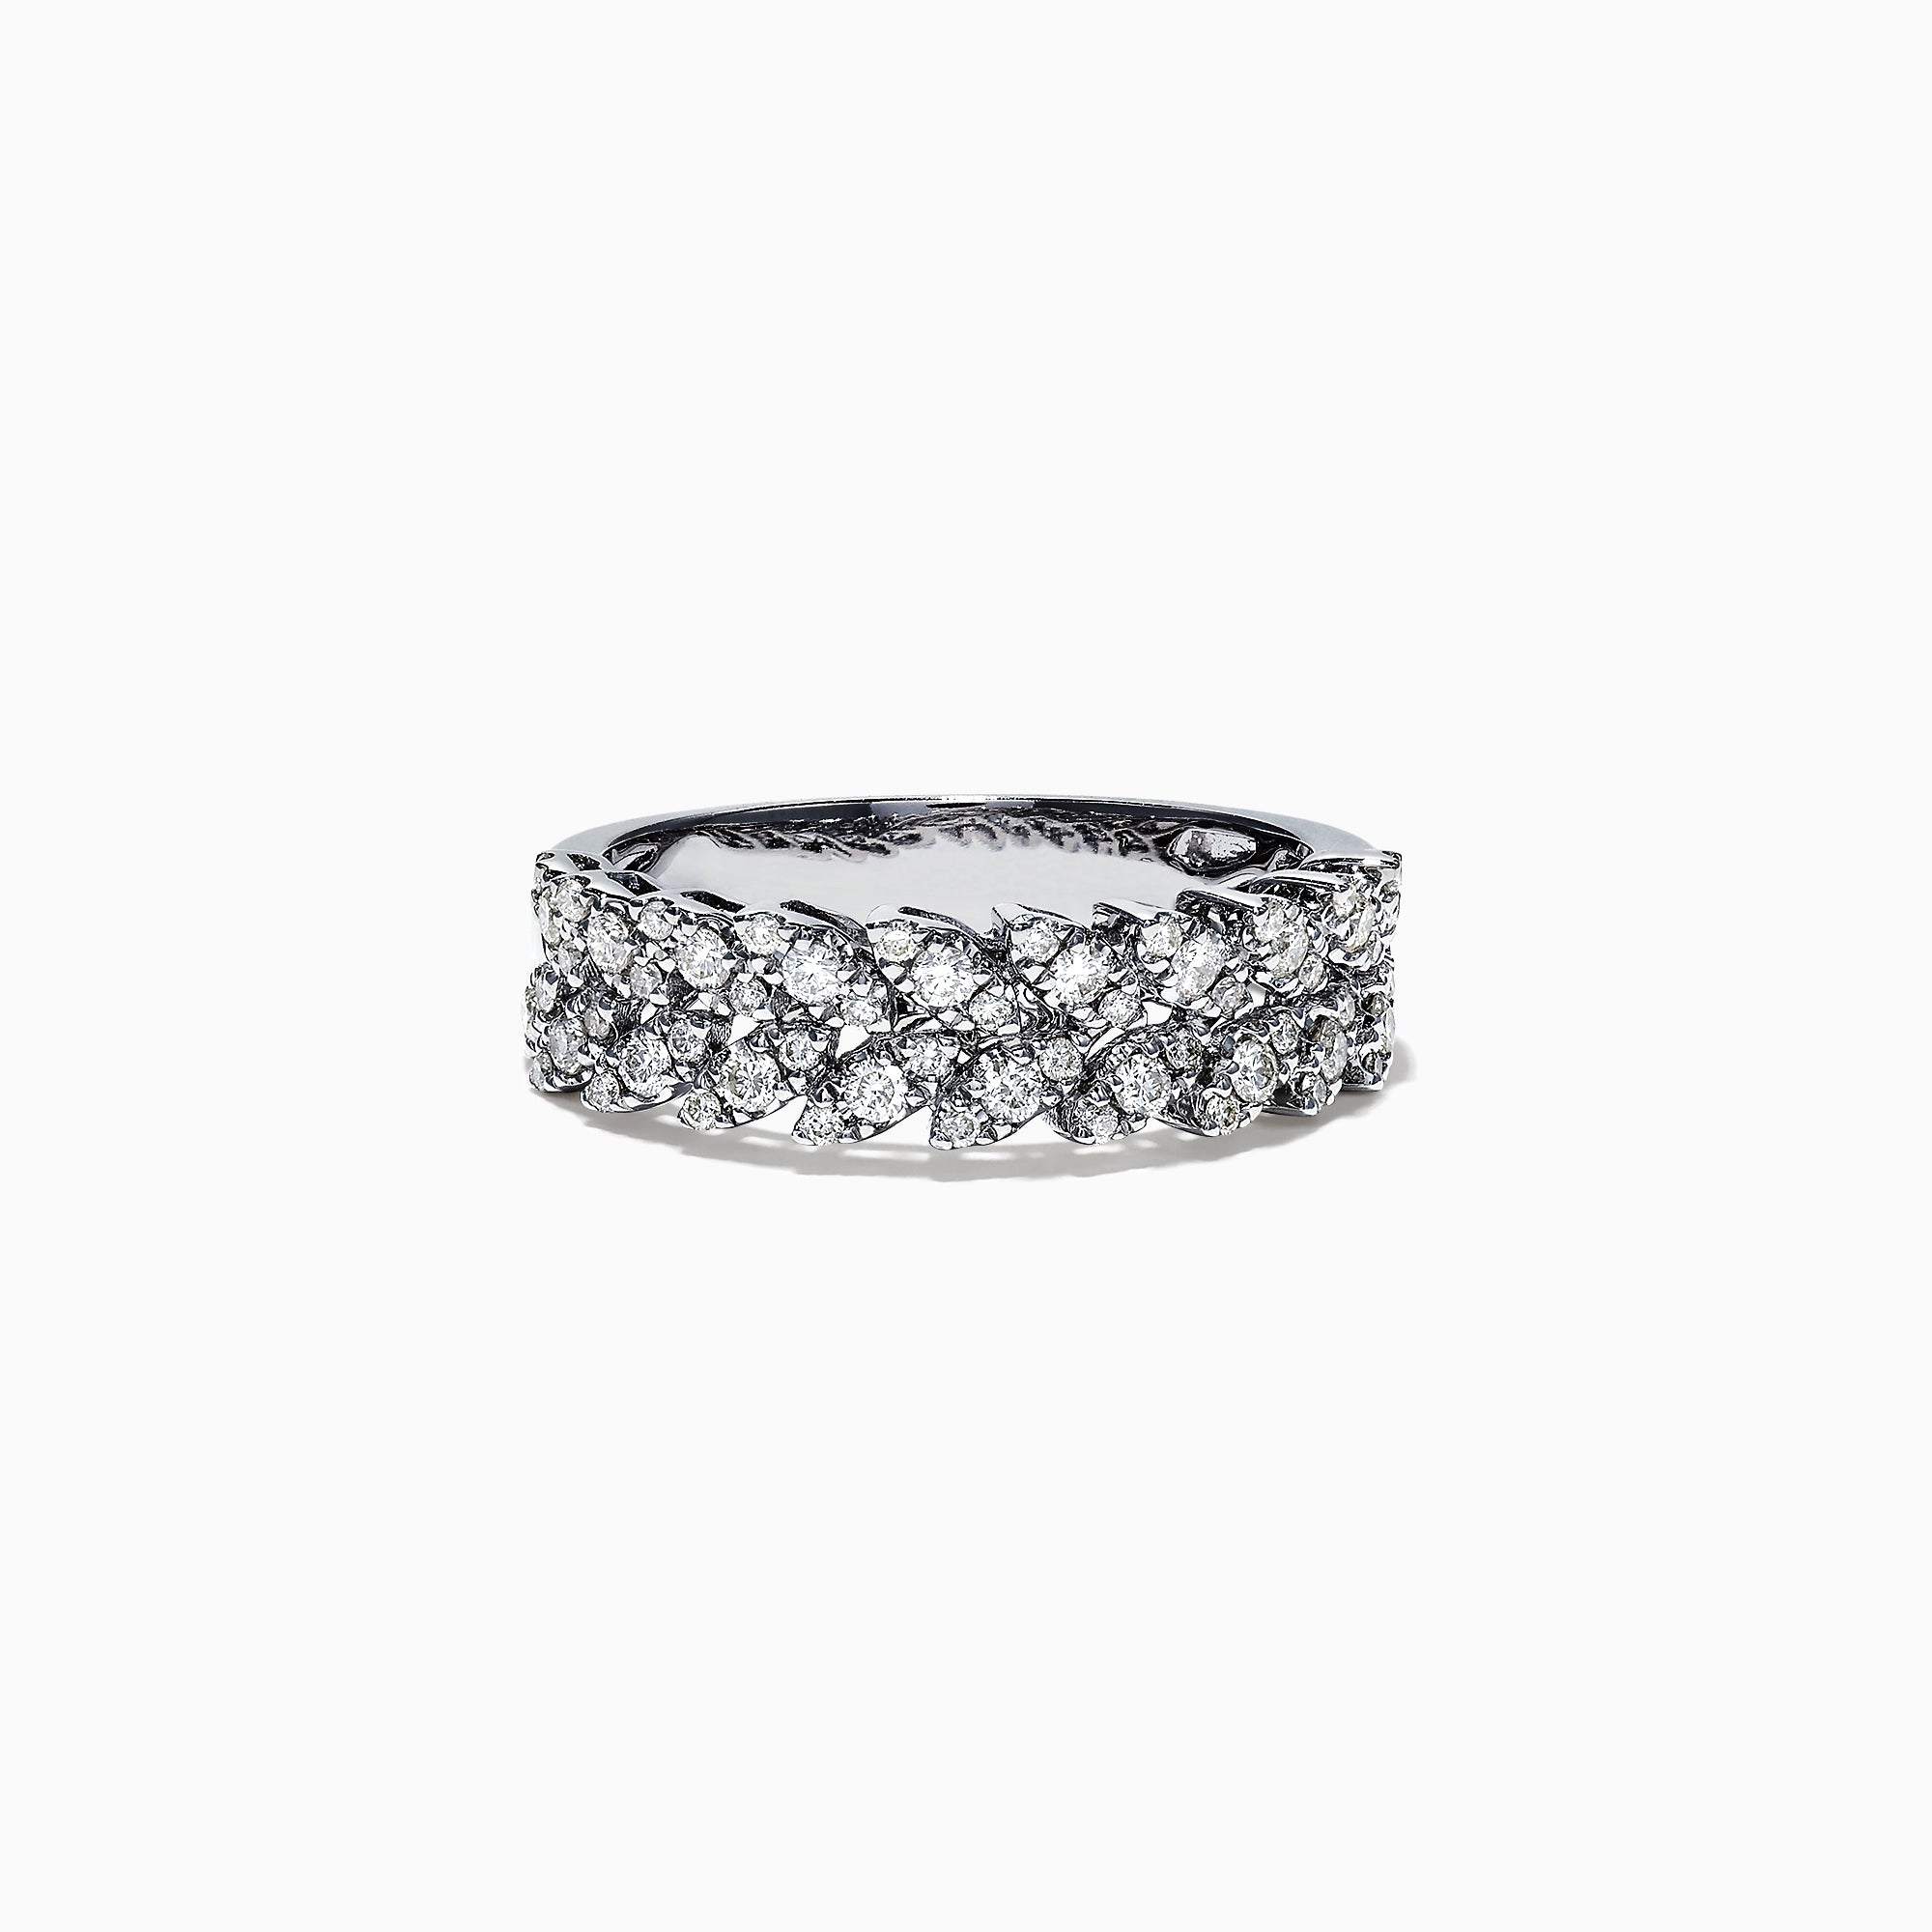 Effy Pave Classica 14K White Gold Diamond Ring, 0.59 TCW | effyjewelry.com